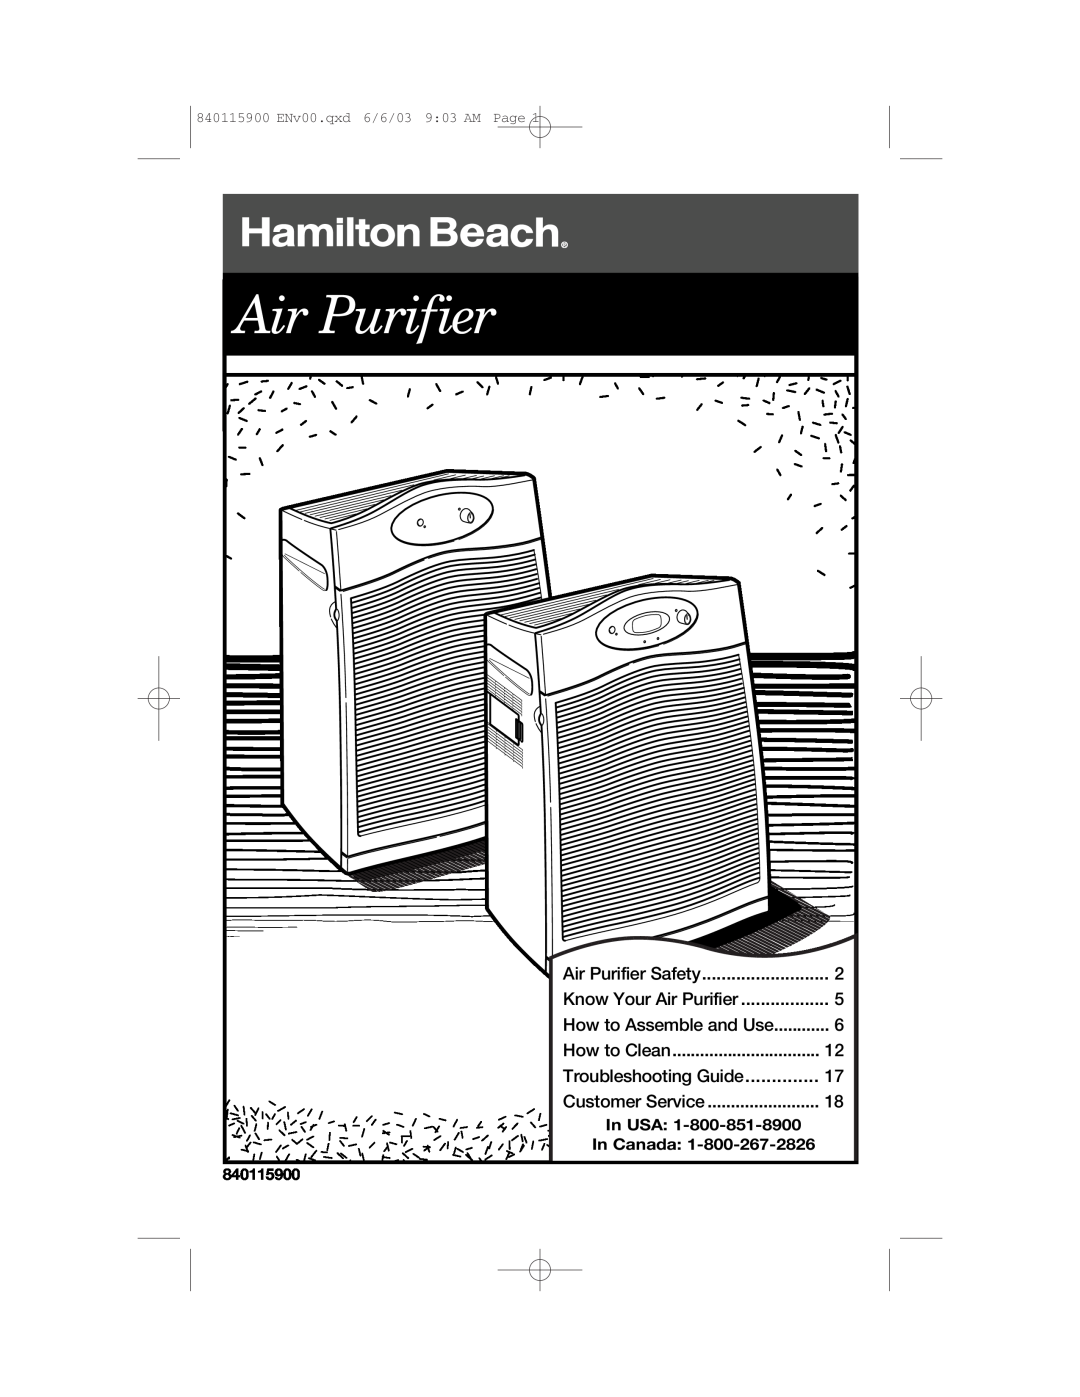 Hamilton Beach 840115900 manual Air Purifier, Troubleshooting Guide, In USA, In Canada 